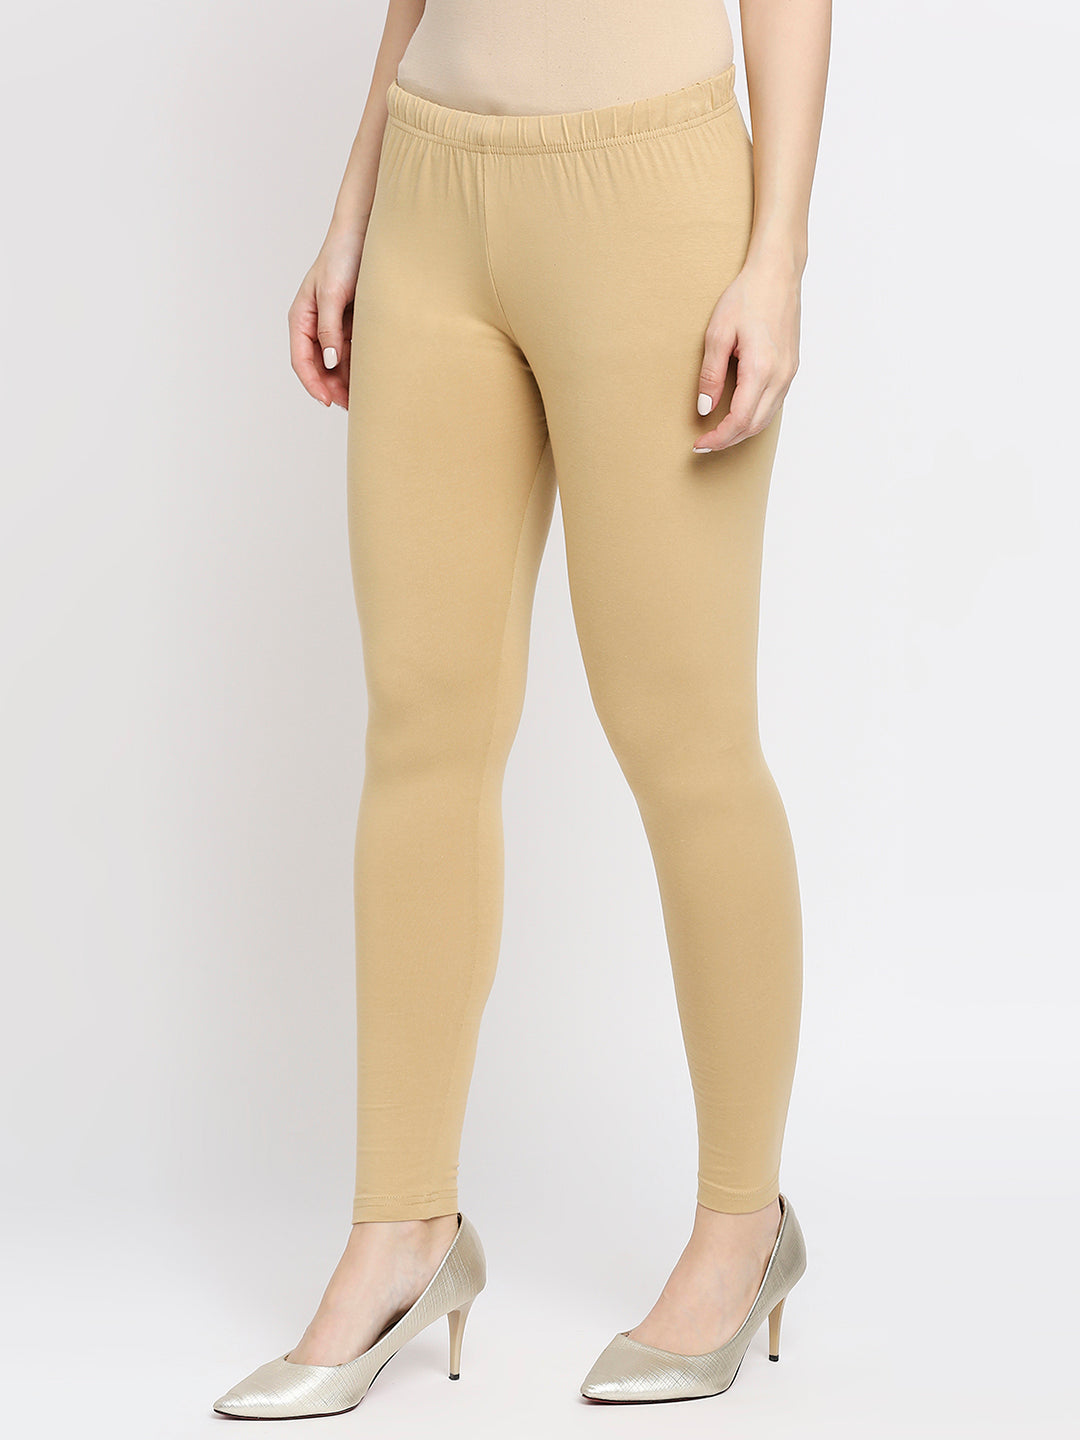 Nicole Miller Faux Leather Leggings Tan Beige Womens Stretch Skinny NWT  Small | eBay